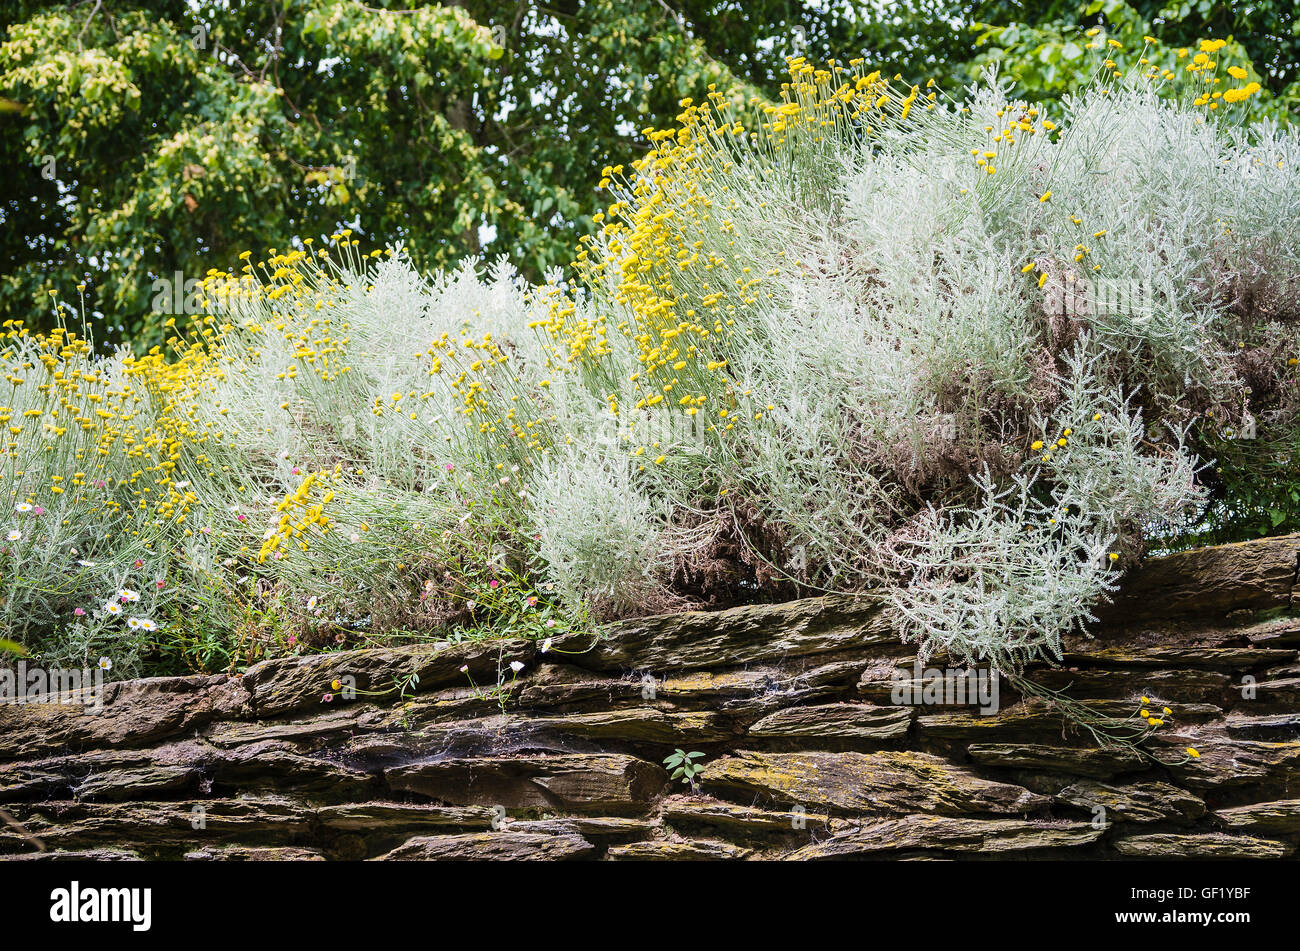 Flowering santolina atop a stone wall in an English garden Stock Photo